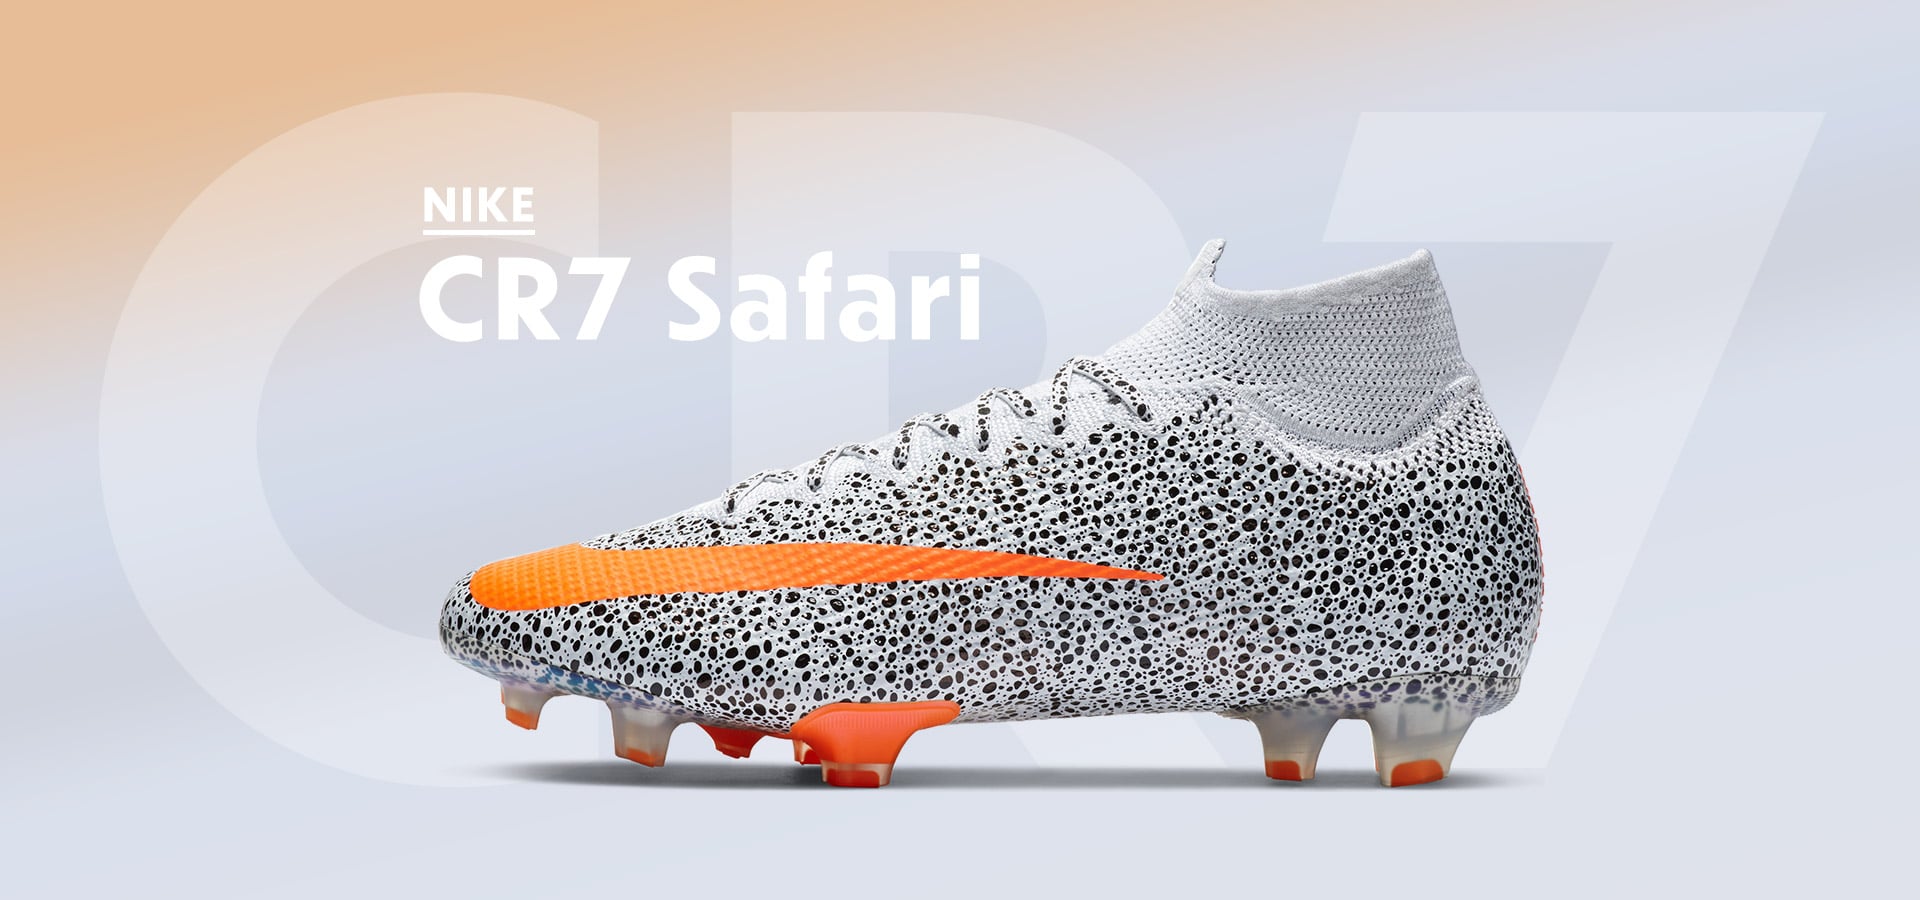 Cr7 Safari Nike ナイキ サッカーショップkamo